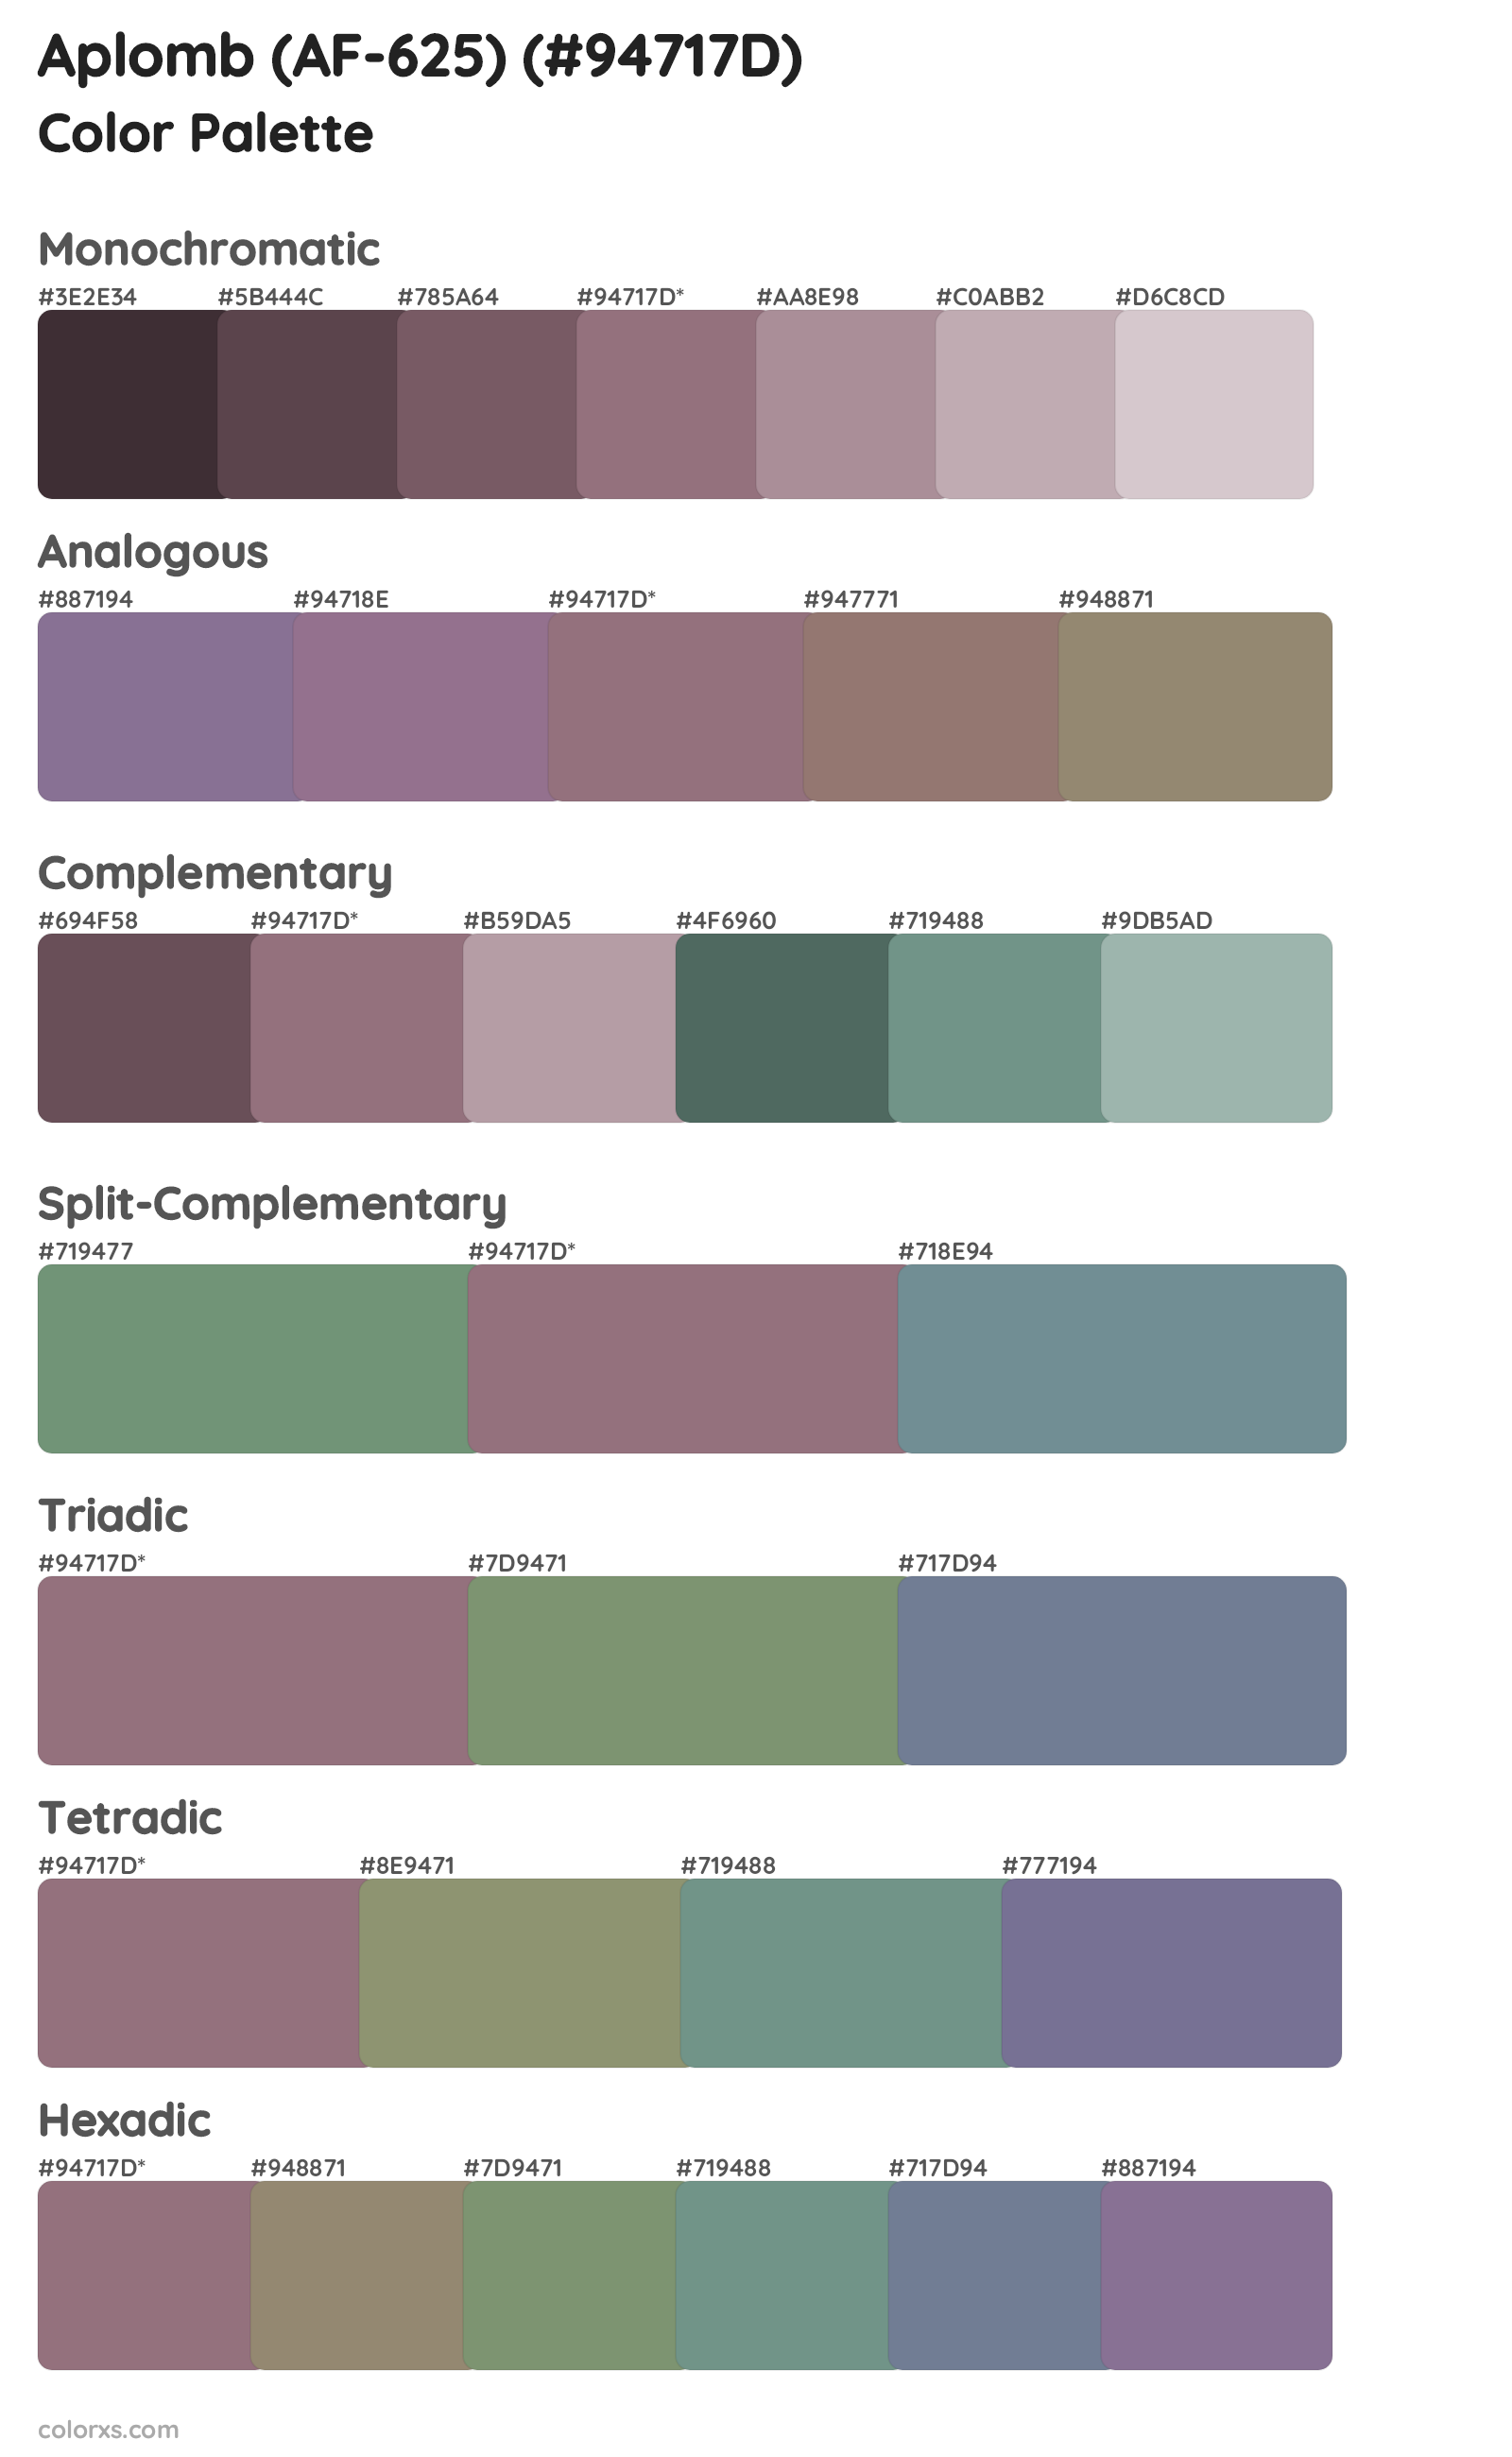 Aplomb (AF-625) Color Scheme Palettes